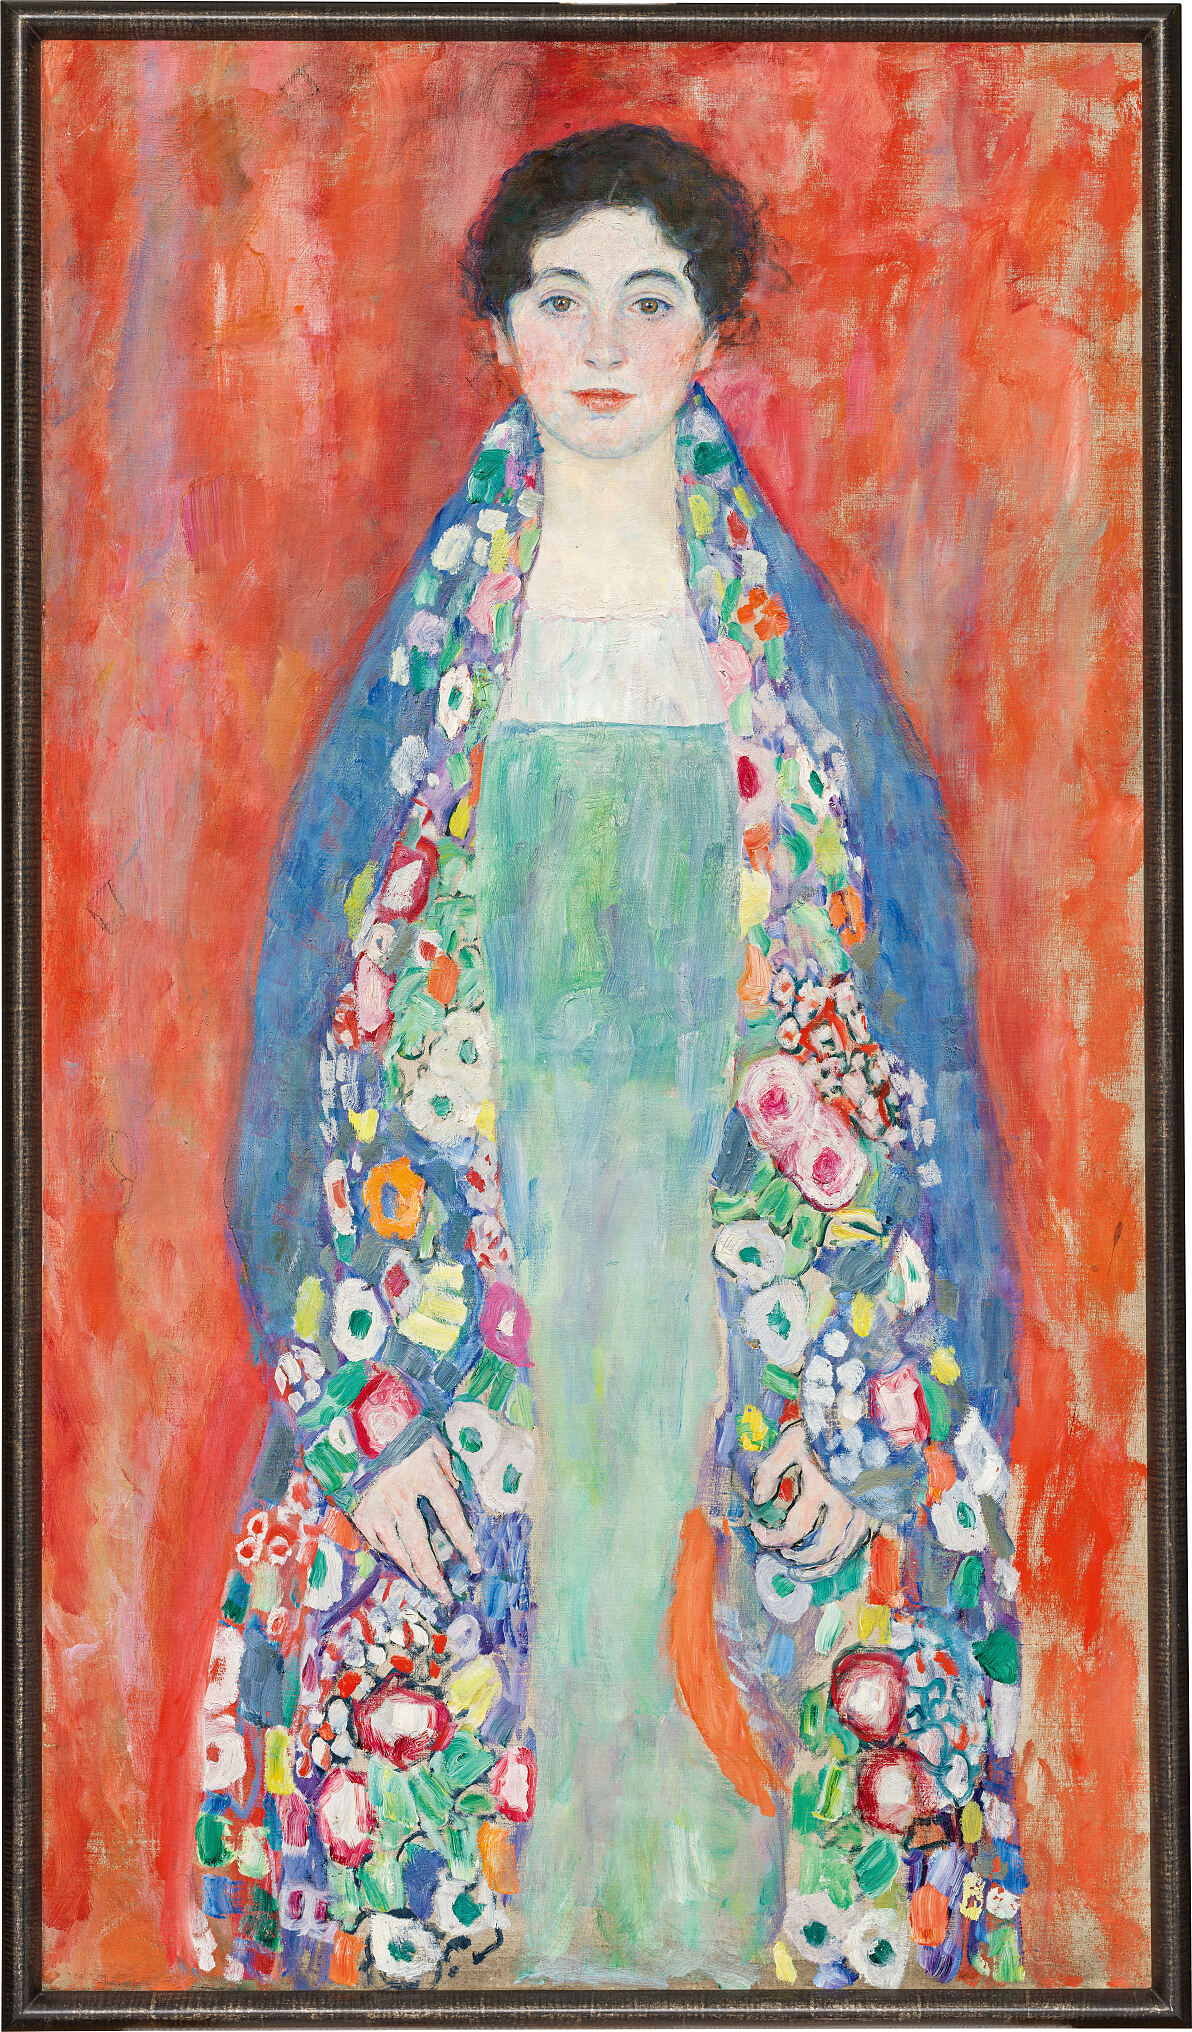 The auction house im Kinsky will present a rediscovered masterpiece of Austrian Modernism: the Portrait of Fräulein Lieser